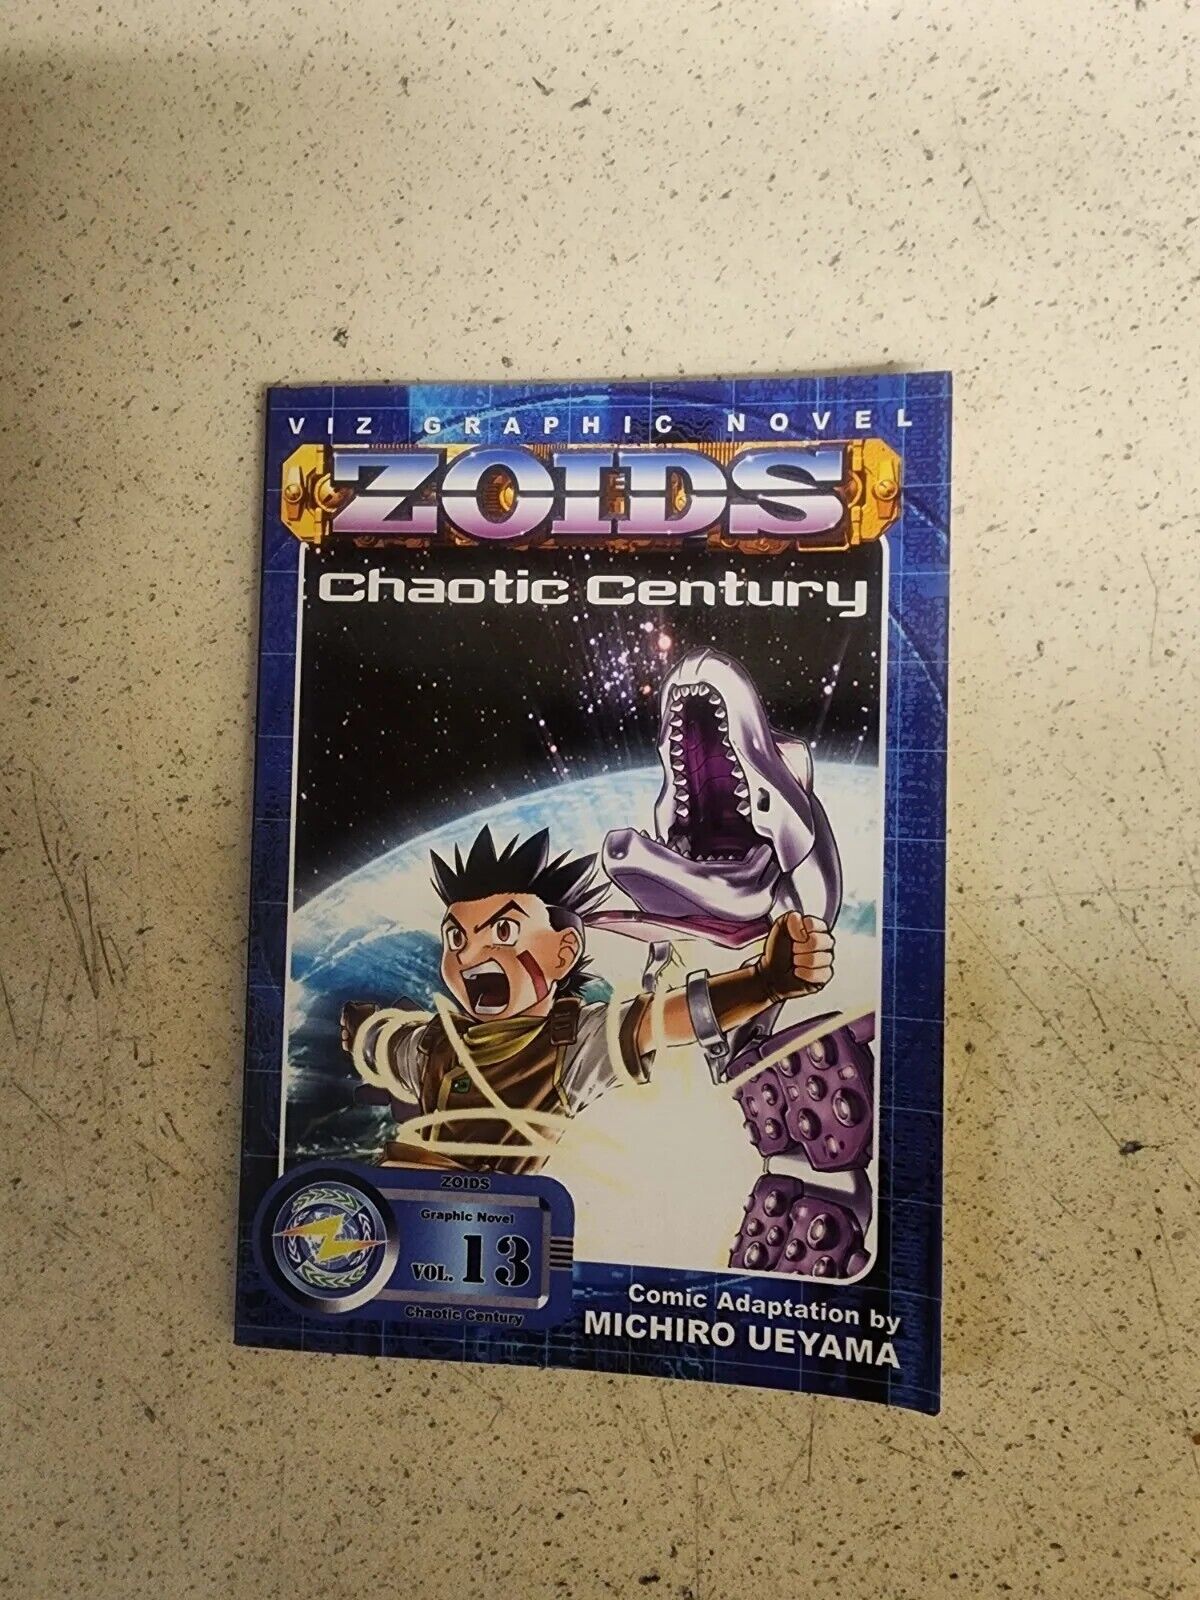  Zoids Chaotic Century Volume 13 manga english by Michiro Ueyama